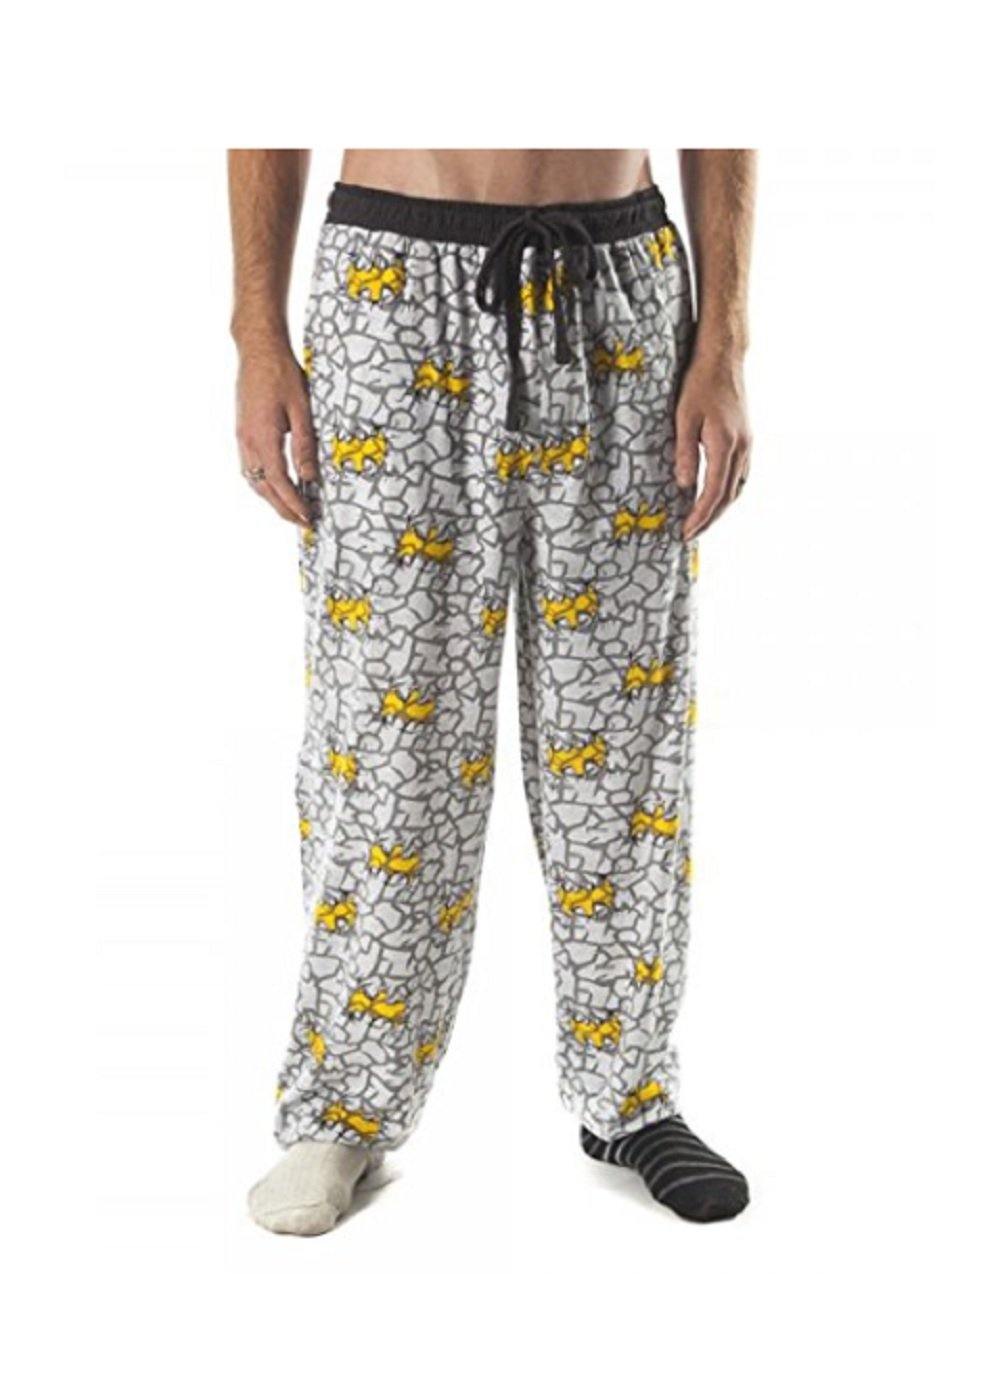 Batman Grey and Yellow Pajama Sleep Pants